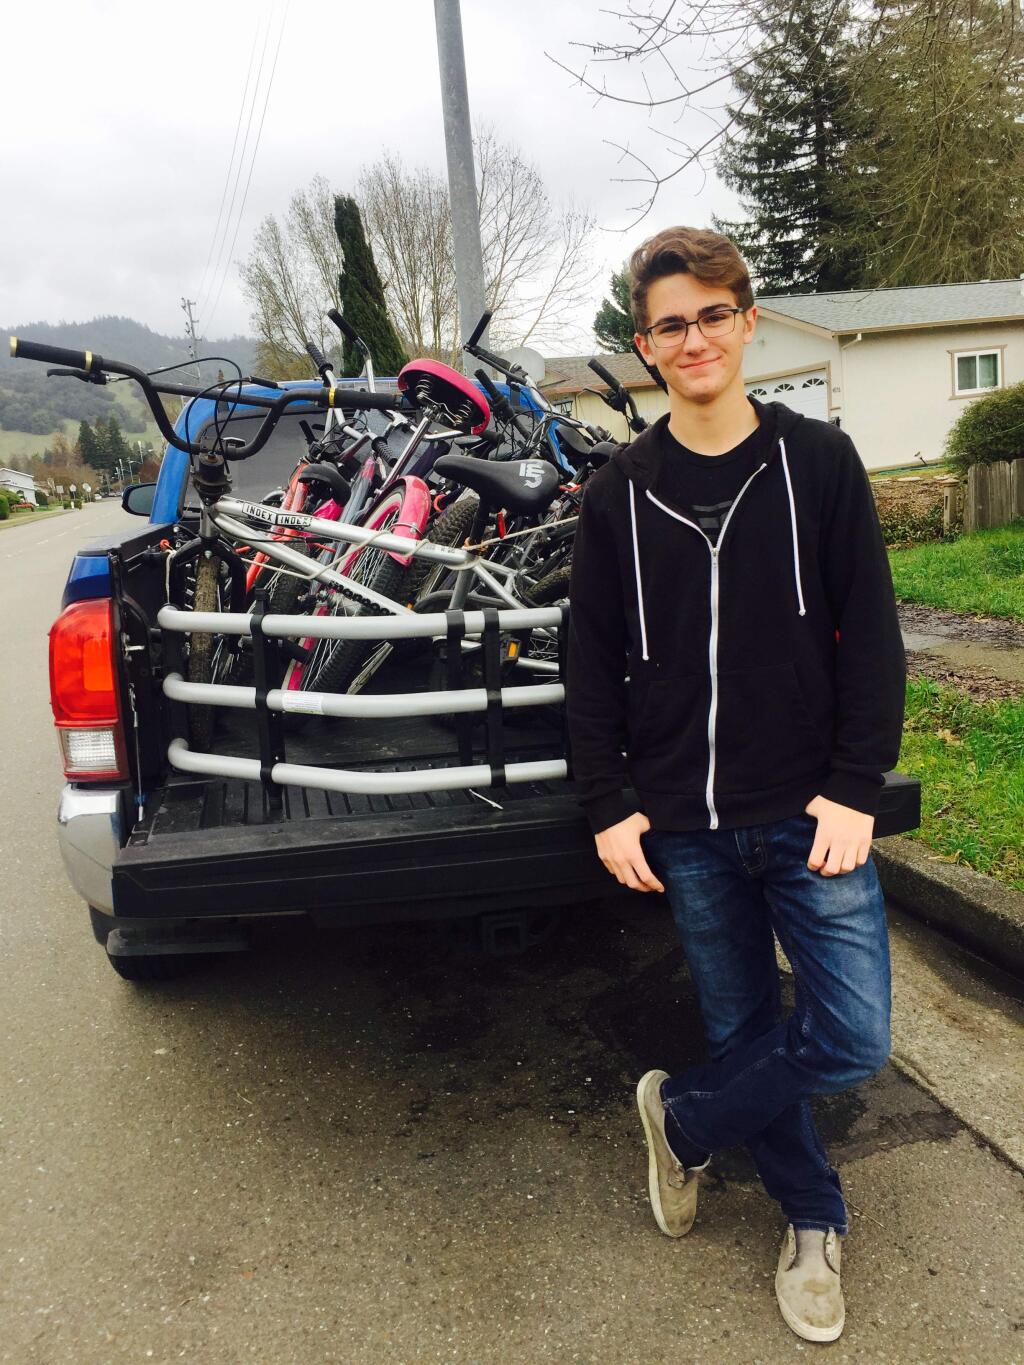 Max Murray, 17, volunteers refurbishing lost or stolen bikes for the Petaluma Police Department